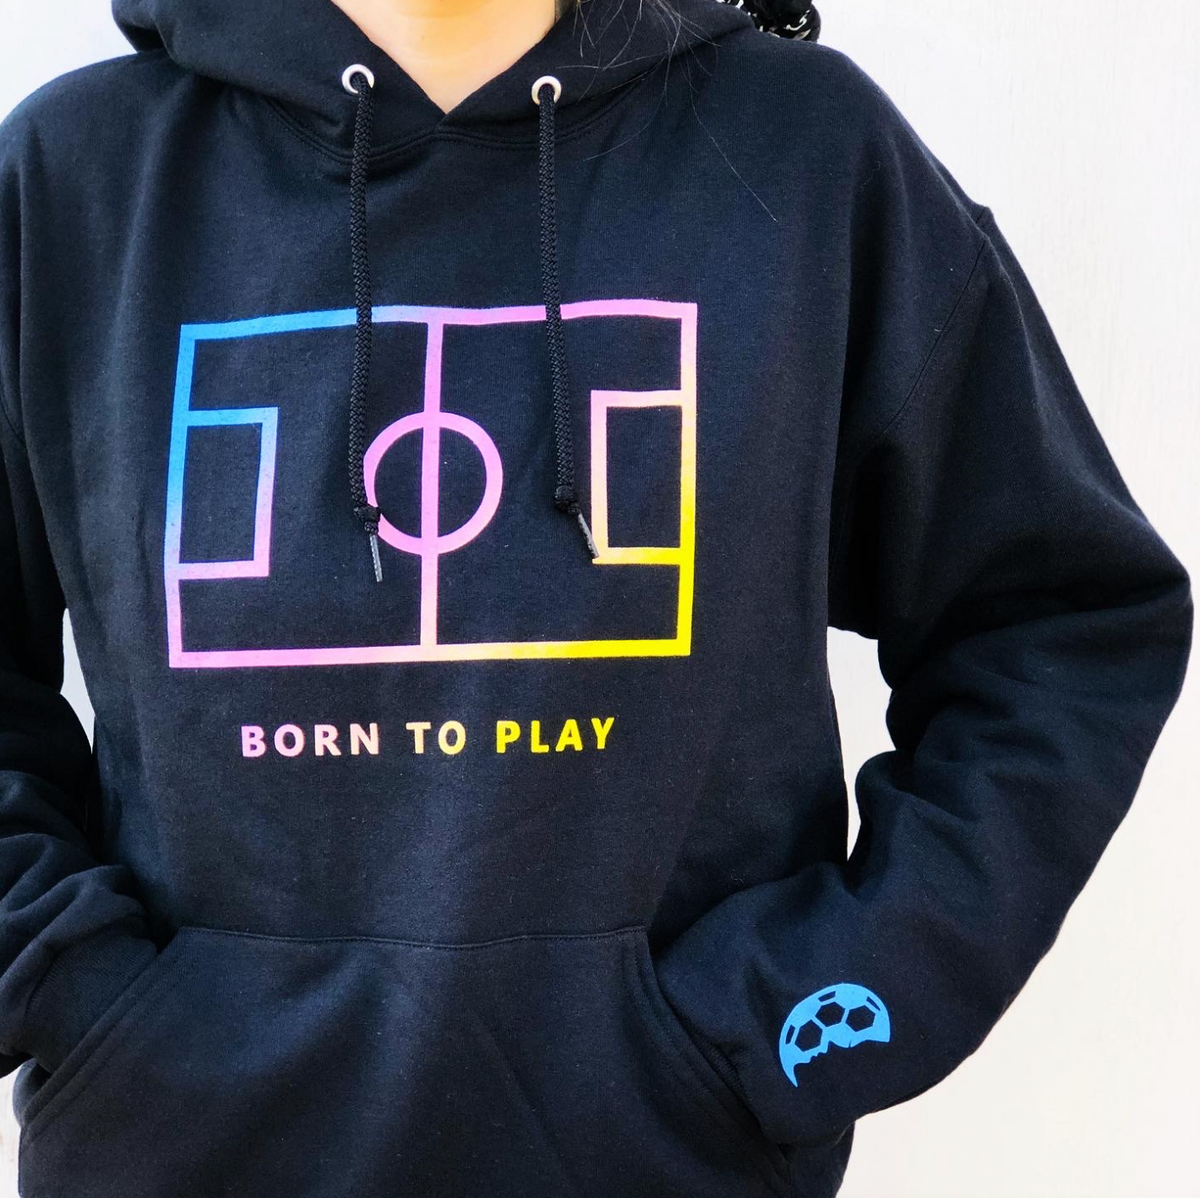 Born To Play Sweatshirt - soccergrlprobs